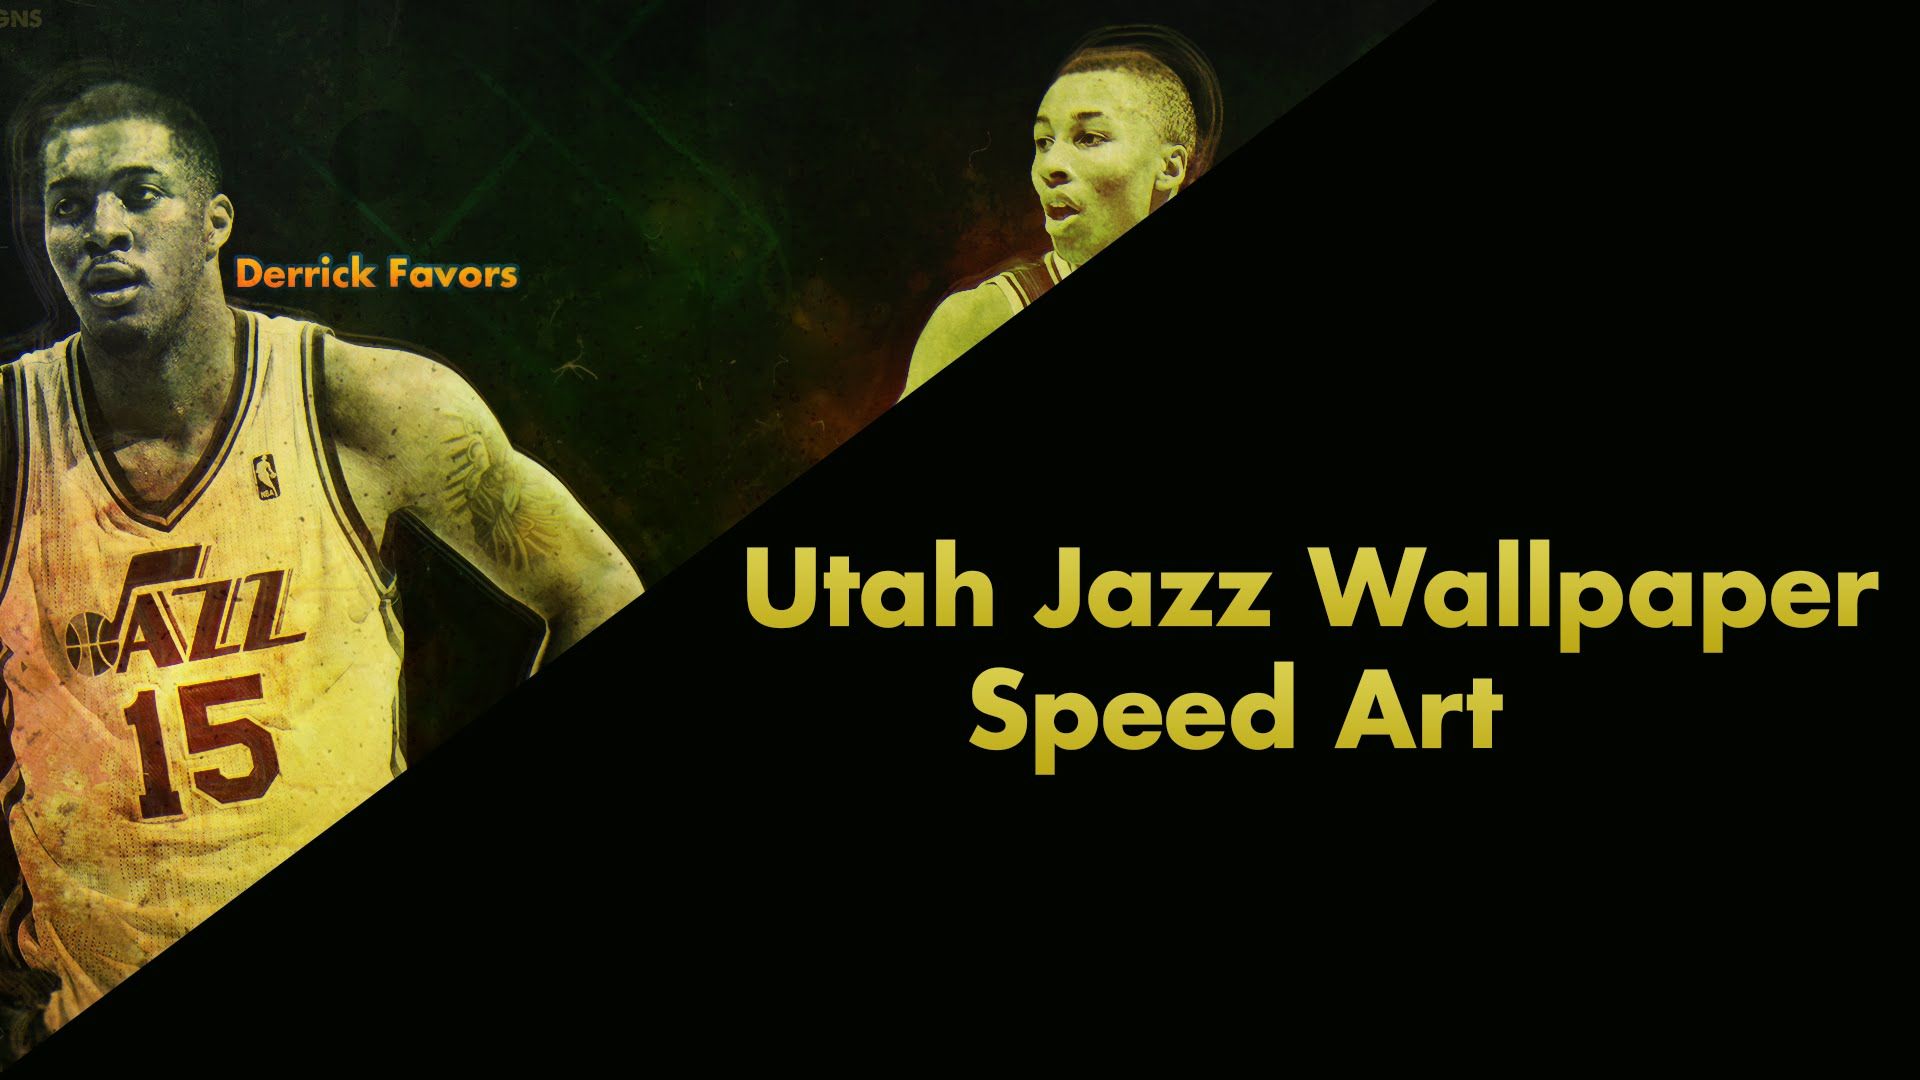 Speed Art | Utah Jazz Wallpaper - YouTube